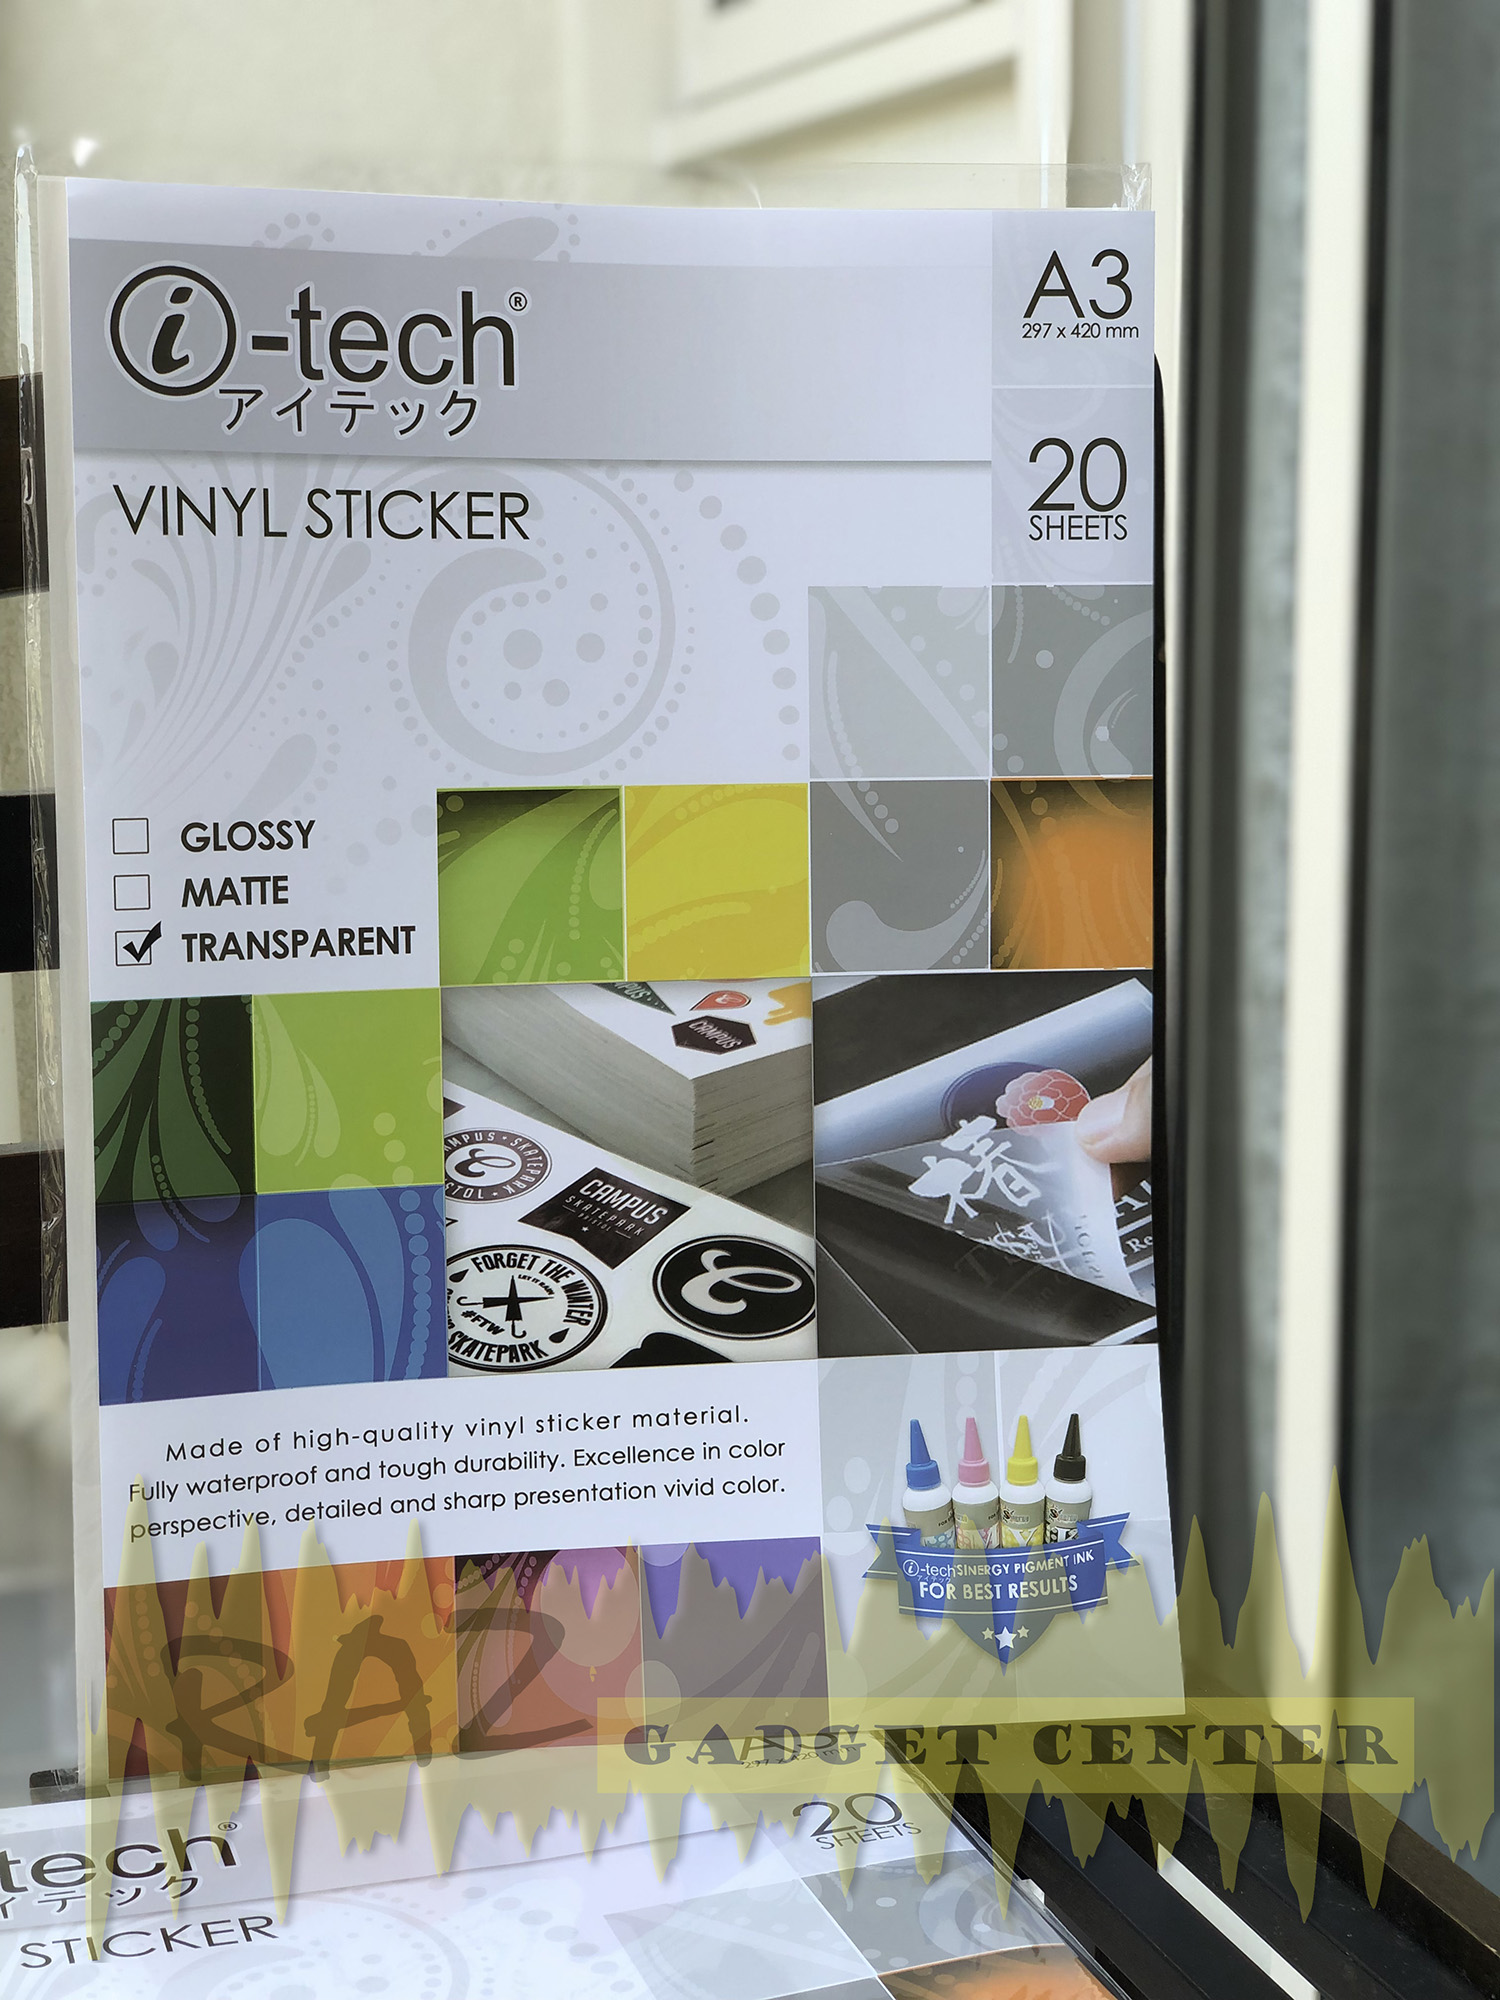 I-tech Waterproof Printable Vinyl Sticker